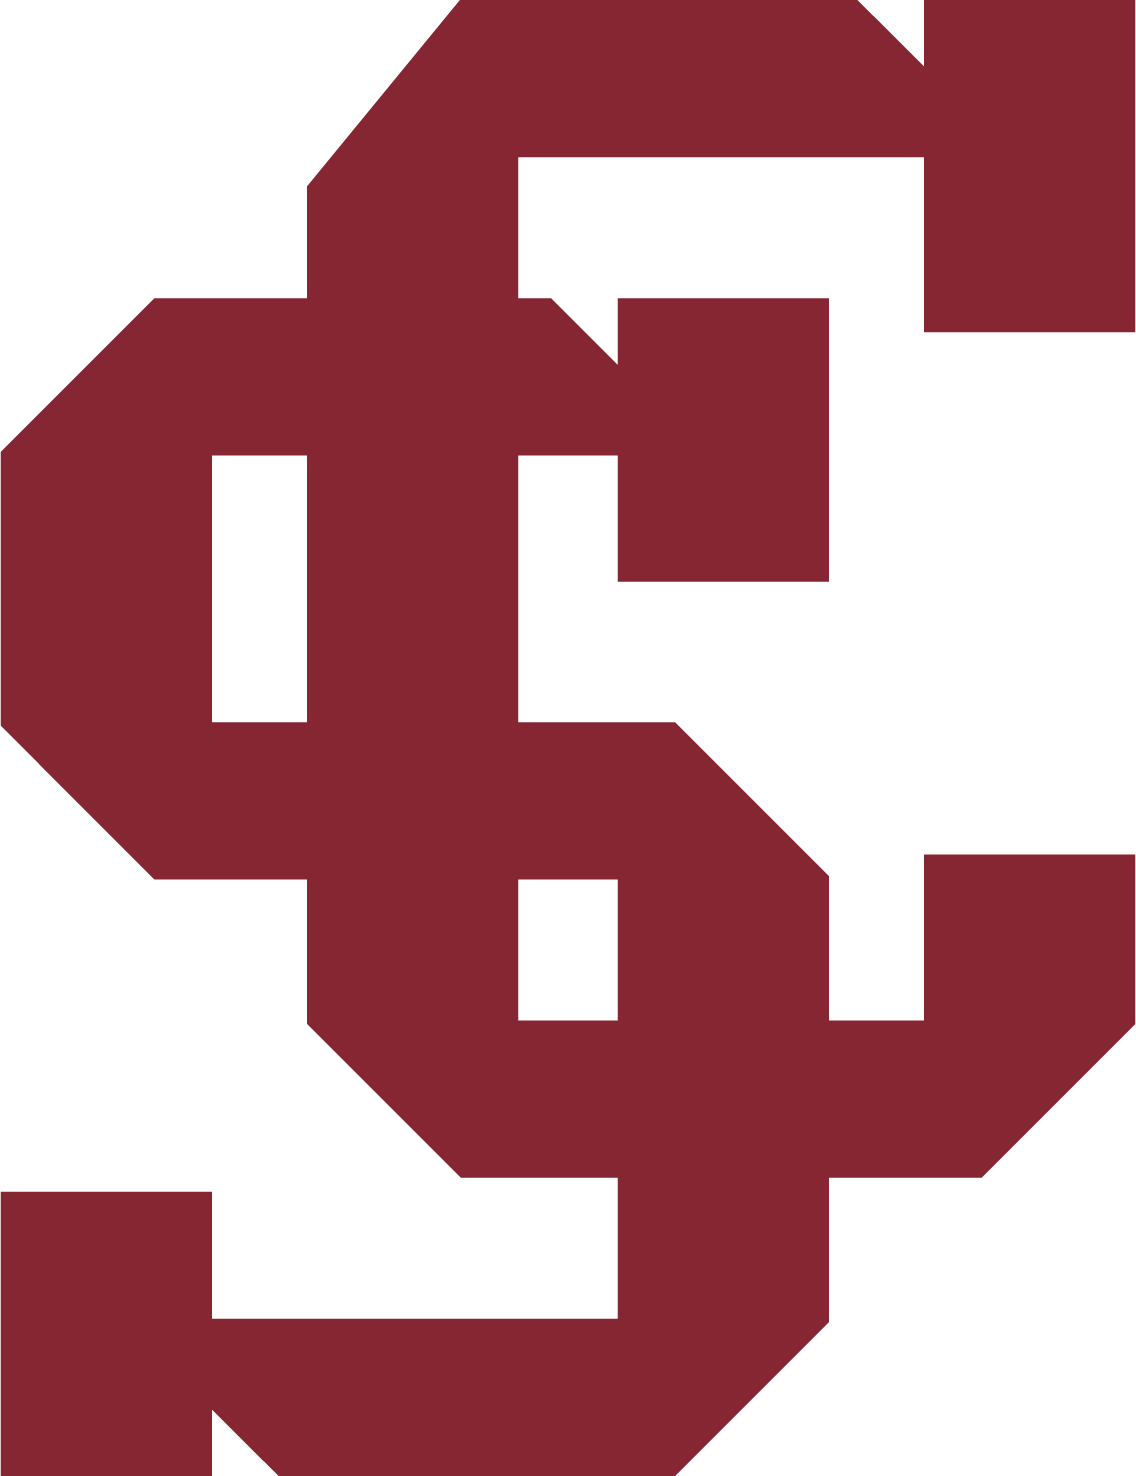 Santa Clara Broncos Logo png